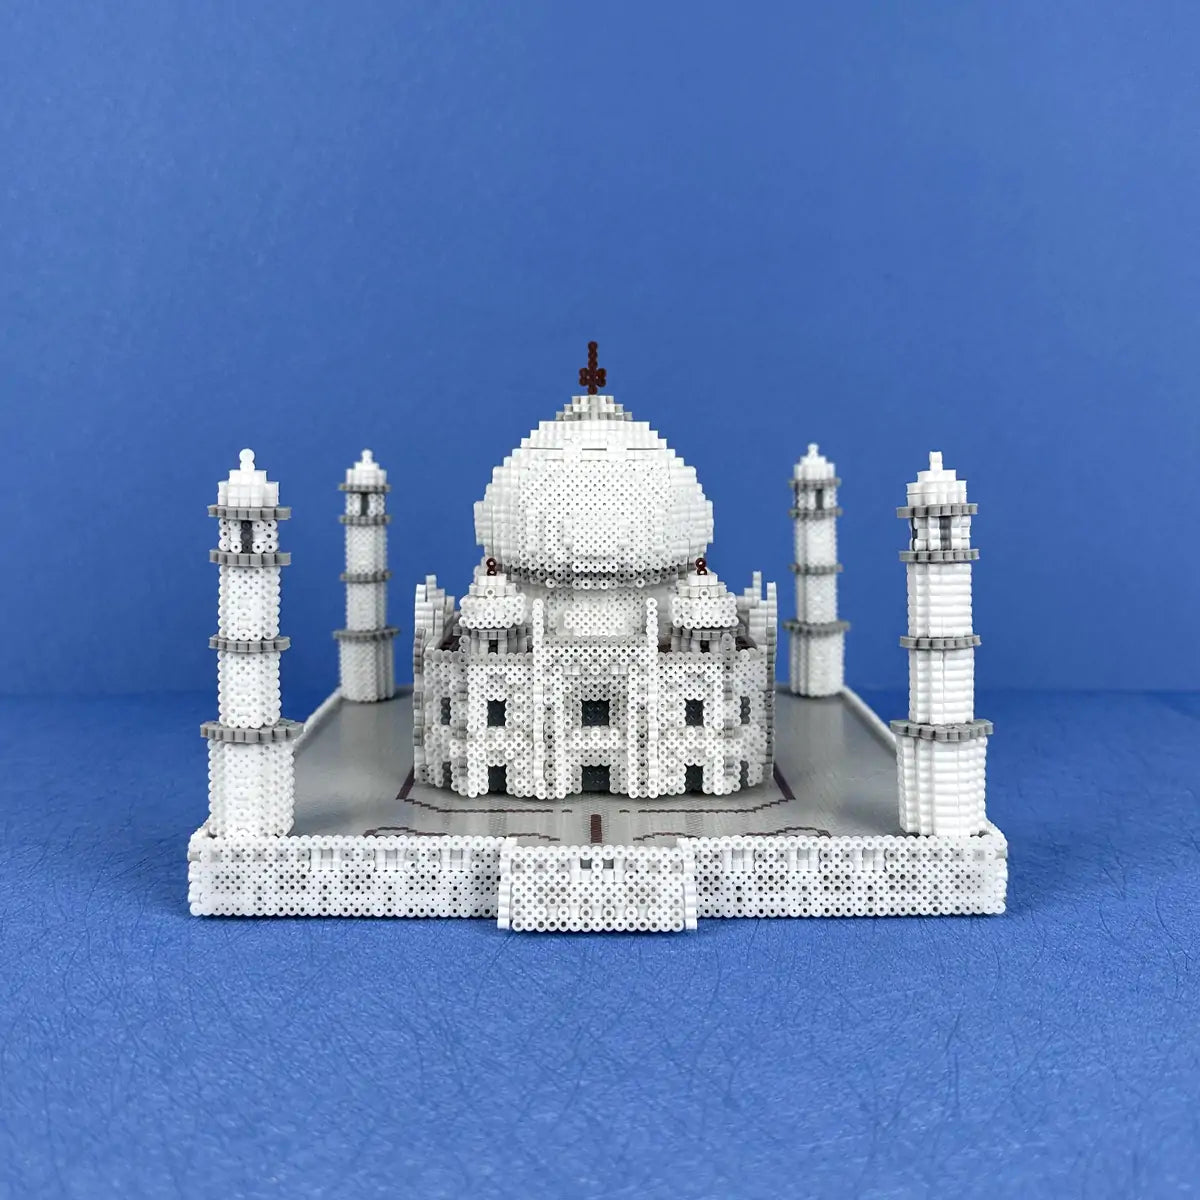 Patrún 3D Taj Mahal saor in aisce,